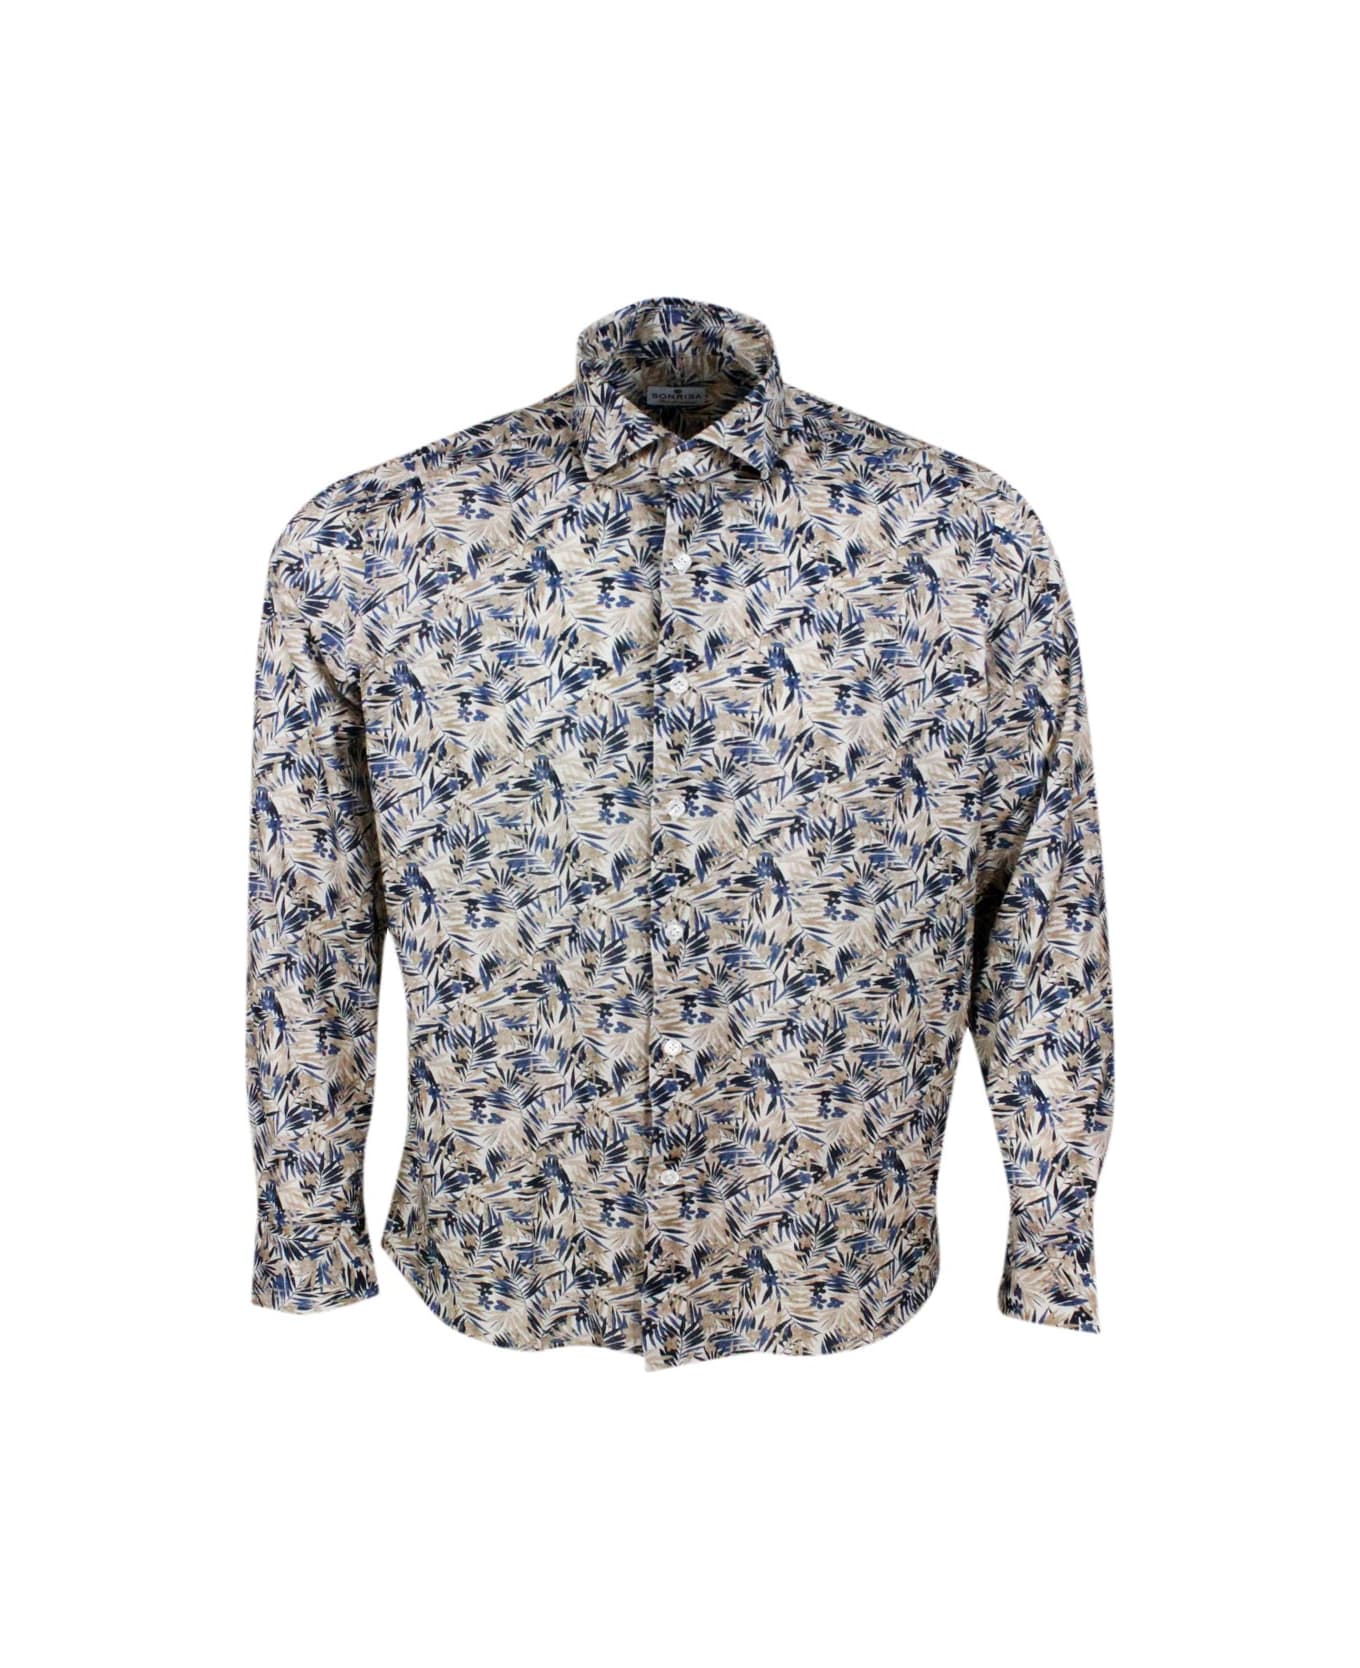 Sonrisa Luxury Shirt In Soft, Precious And Very Fine Stretch Cotton Flower With Spread Collar In Fern Print - Beige